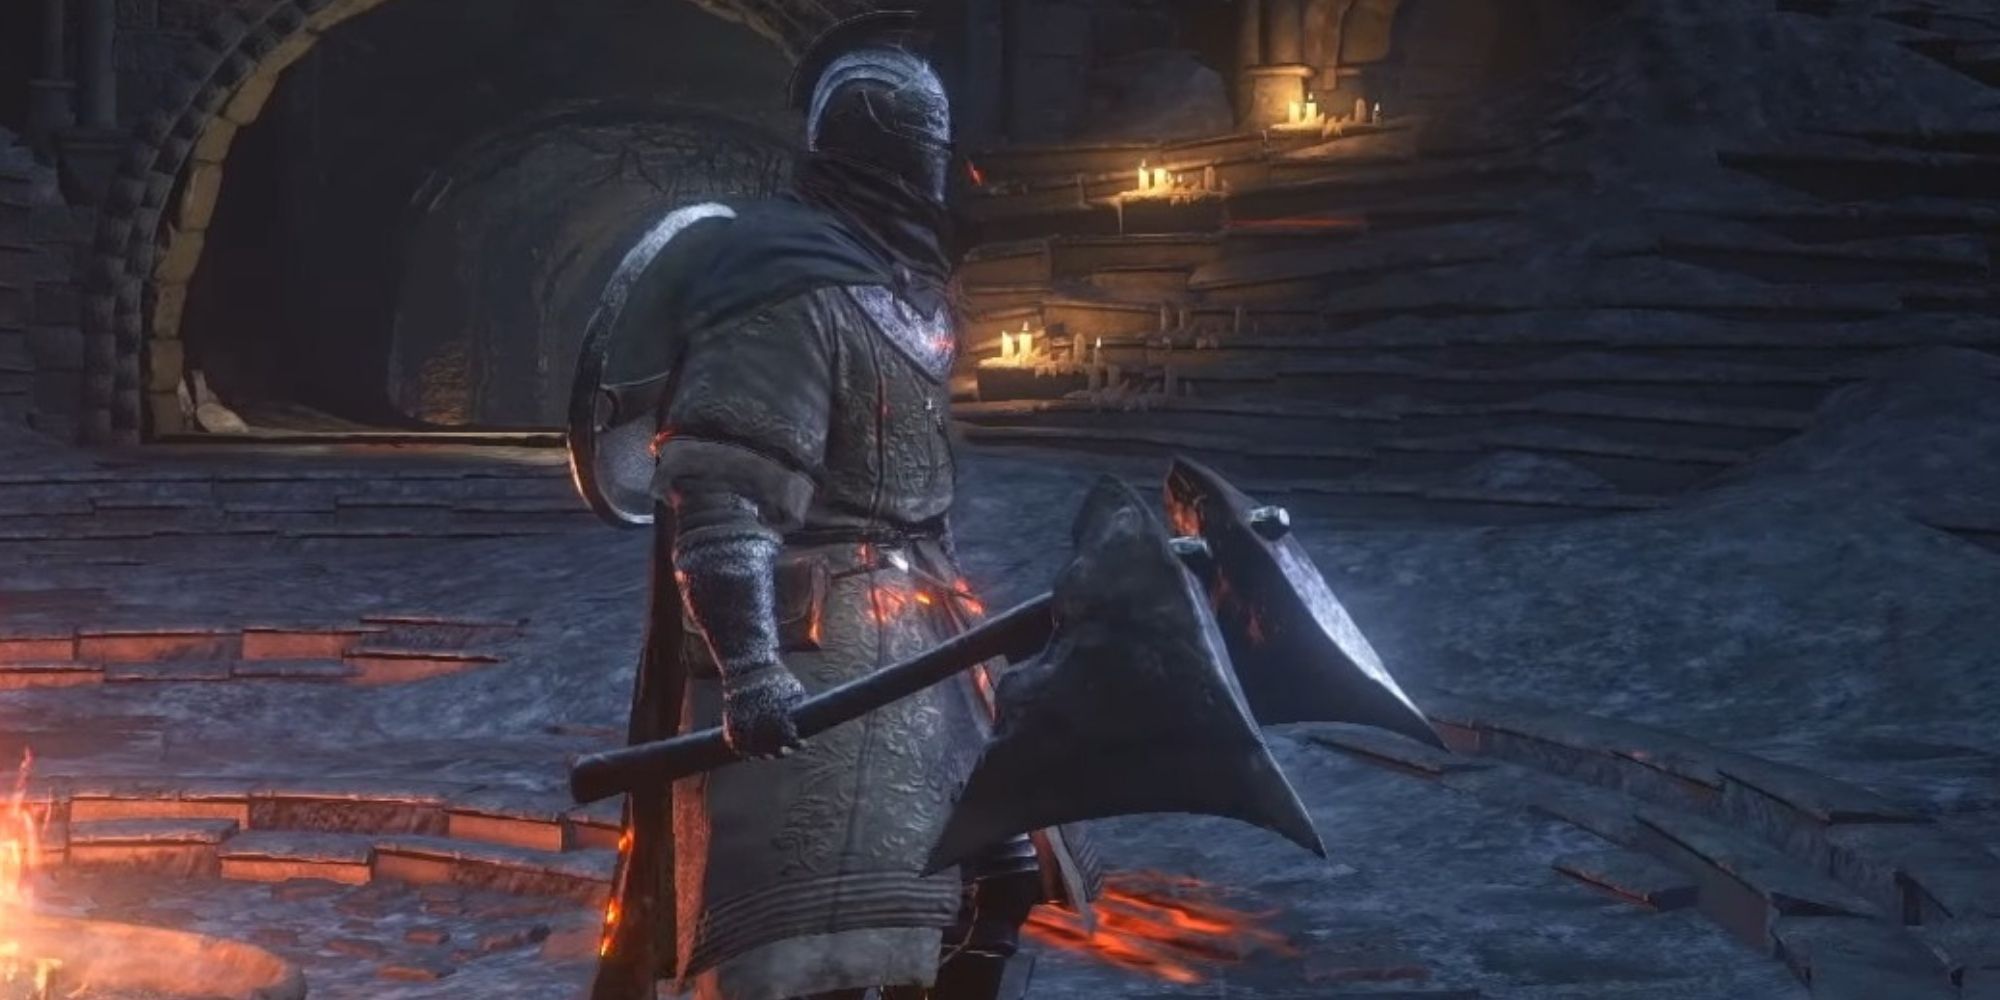 Winged Knight TwinAxes in Dark Souls 3 at Firelink Shrine